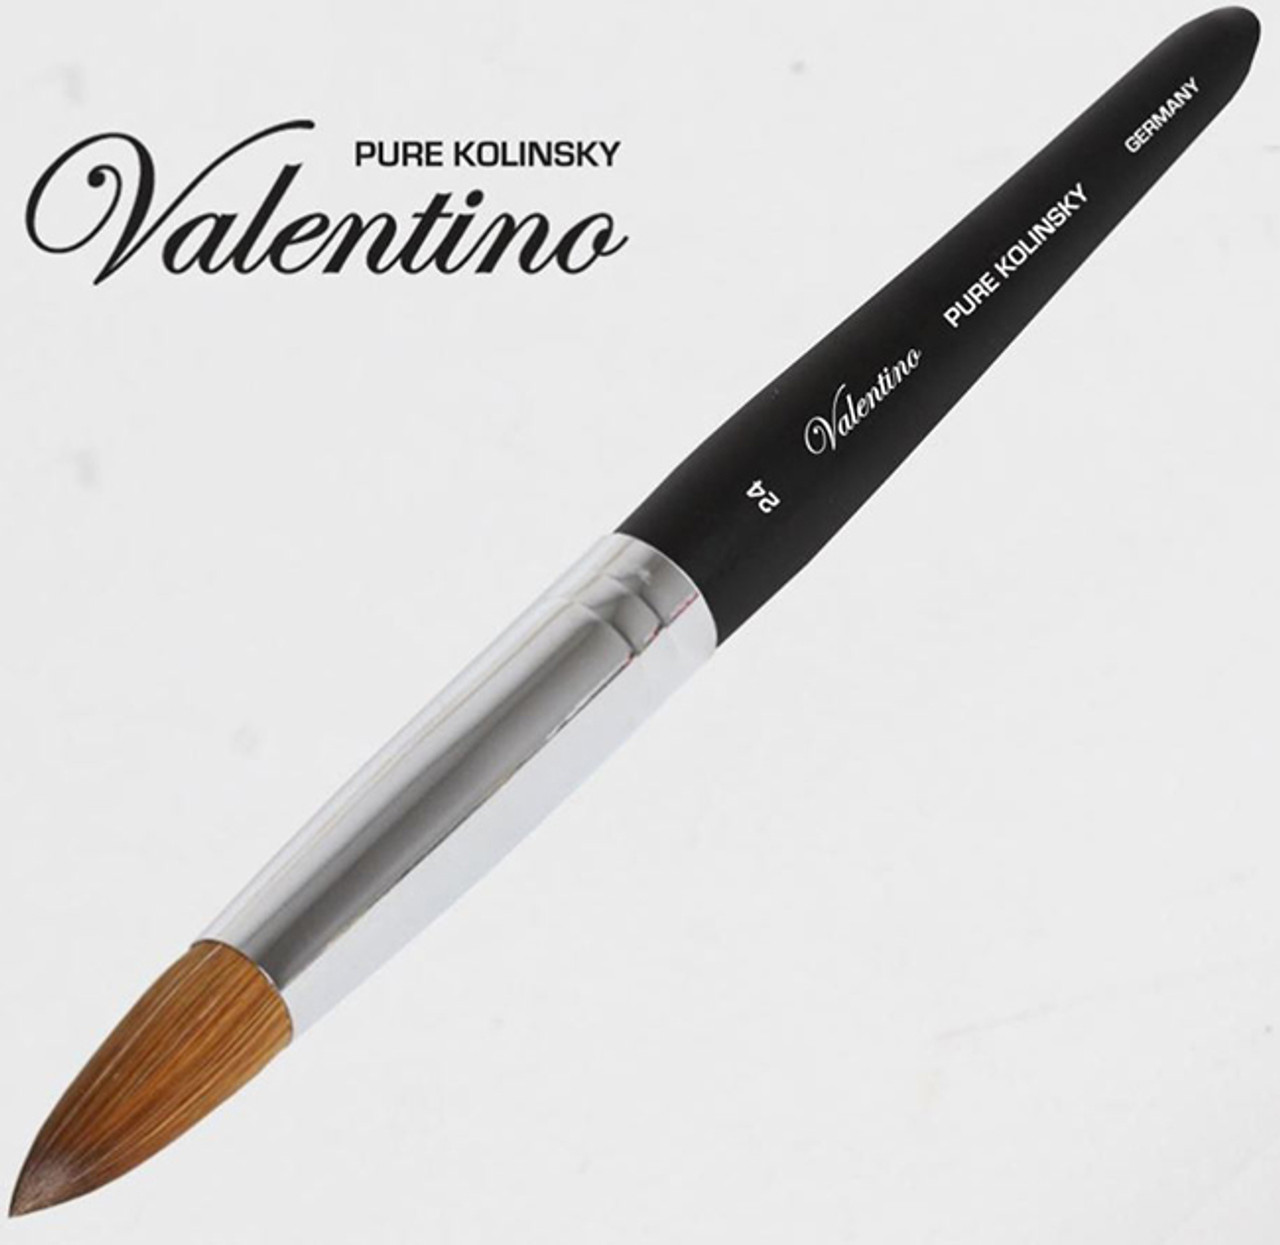 Valentino Pure Kolinsky Black Wood Handle #24